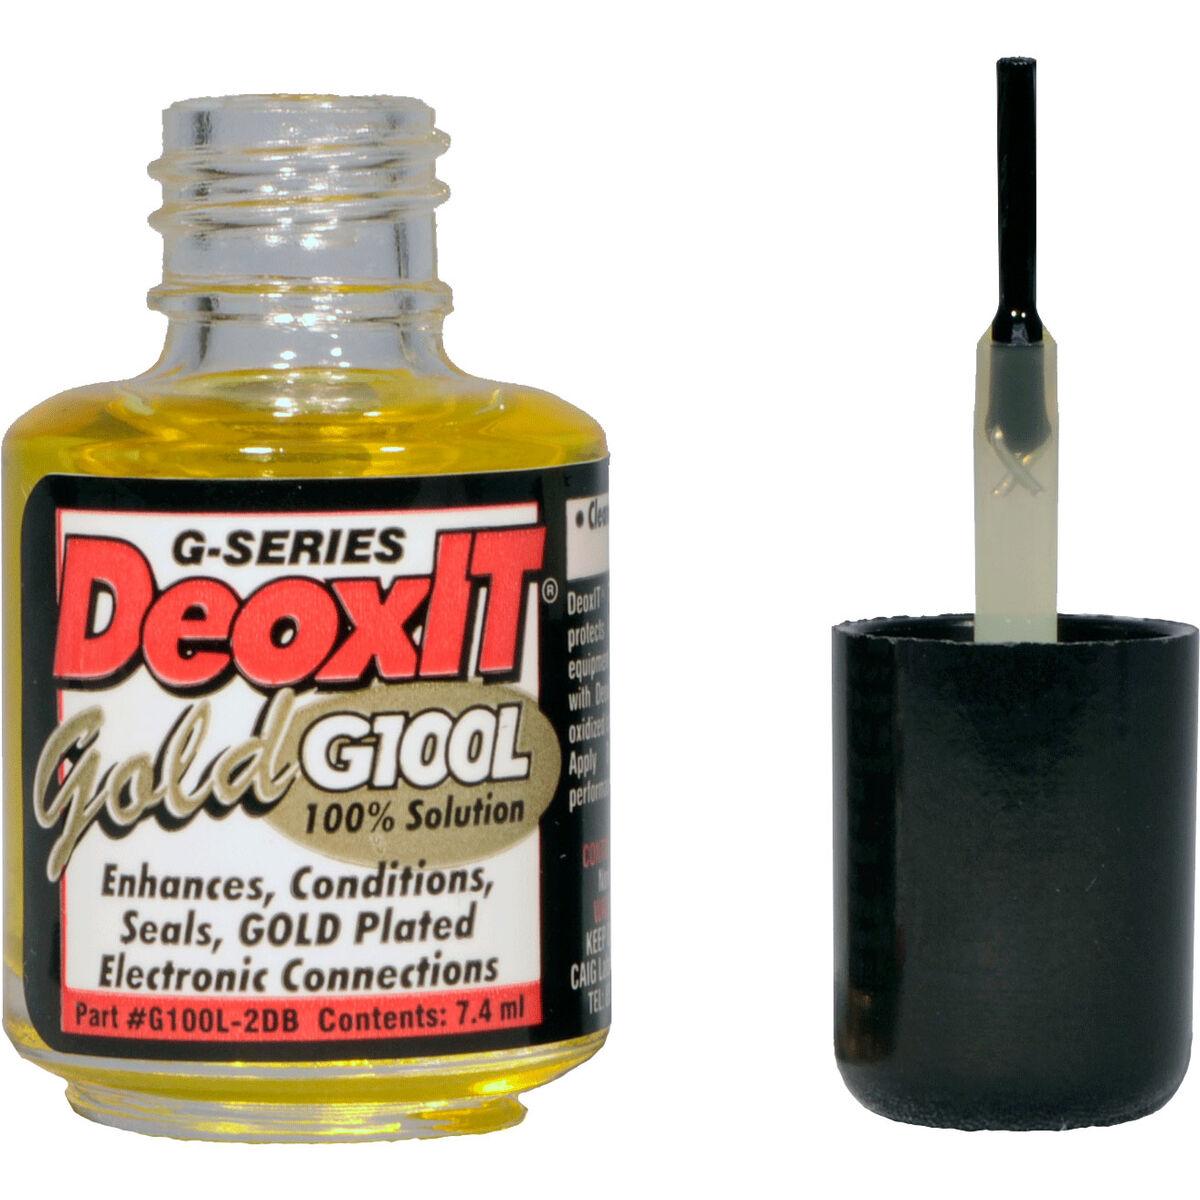 Caig Laboratories G100l-2db DeoxIT Gold G100l Brush Applicator for sale online 